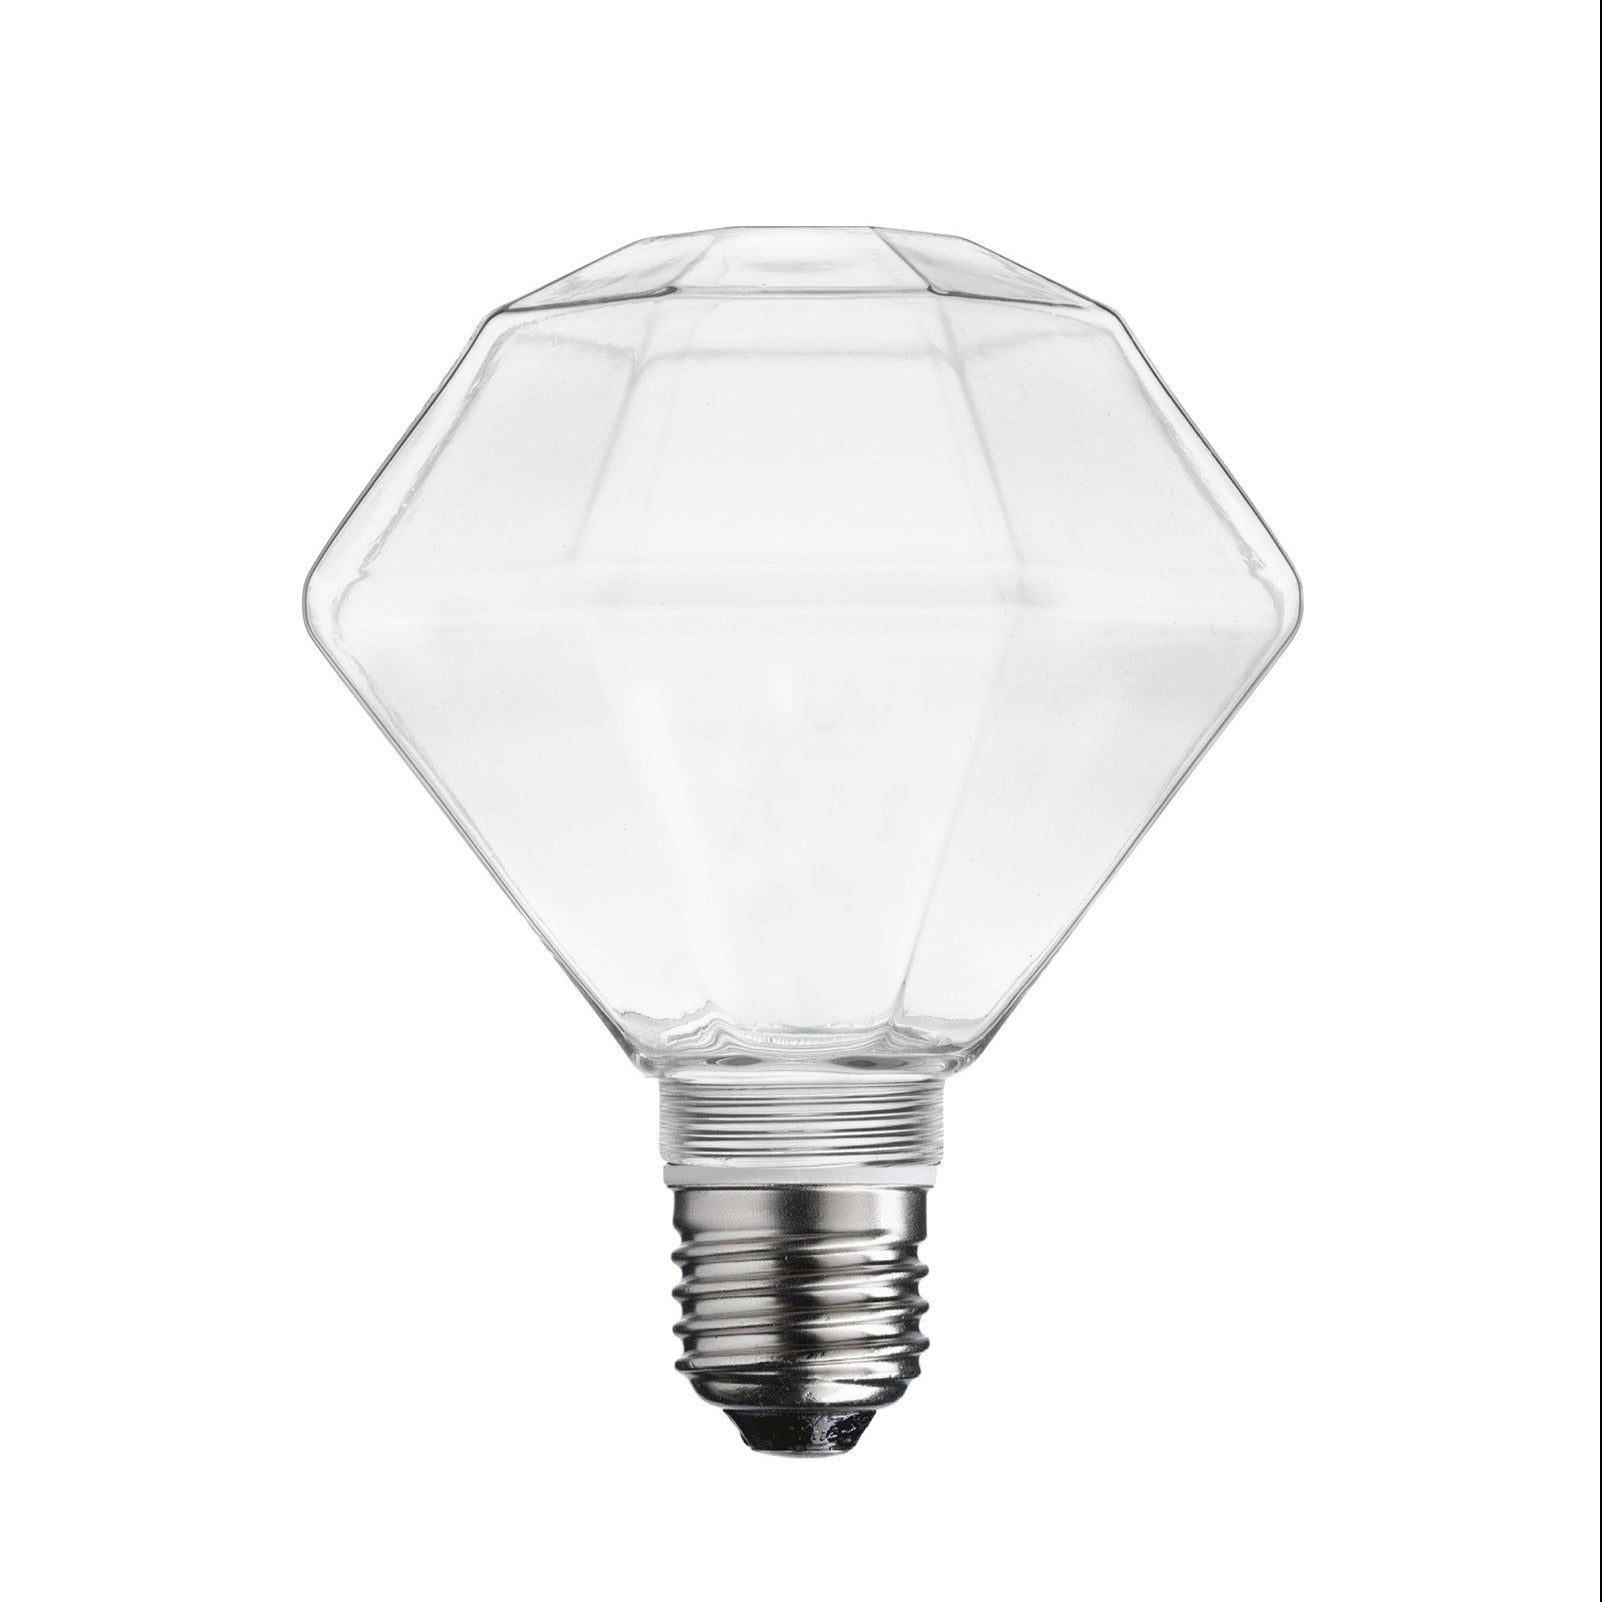 E27 DIAMOND Exl. light source - Edison Light Bulb